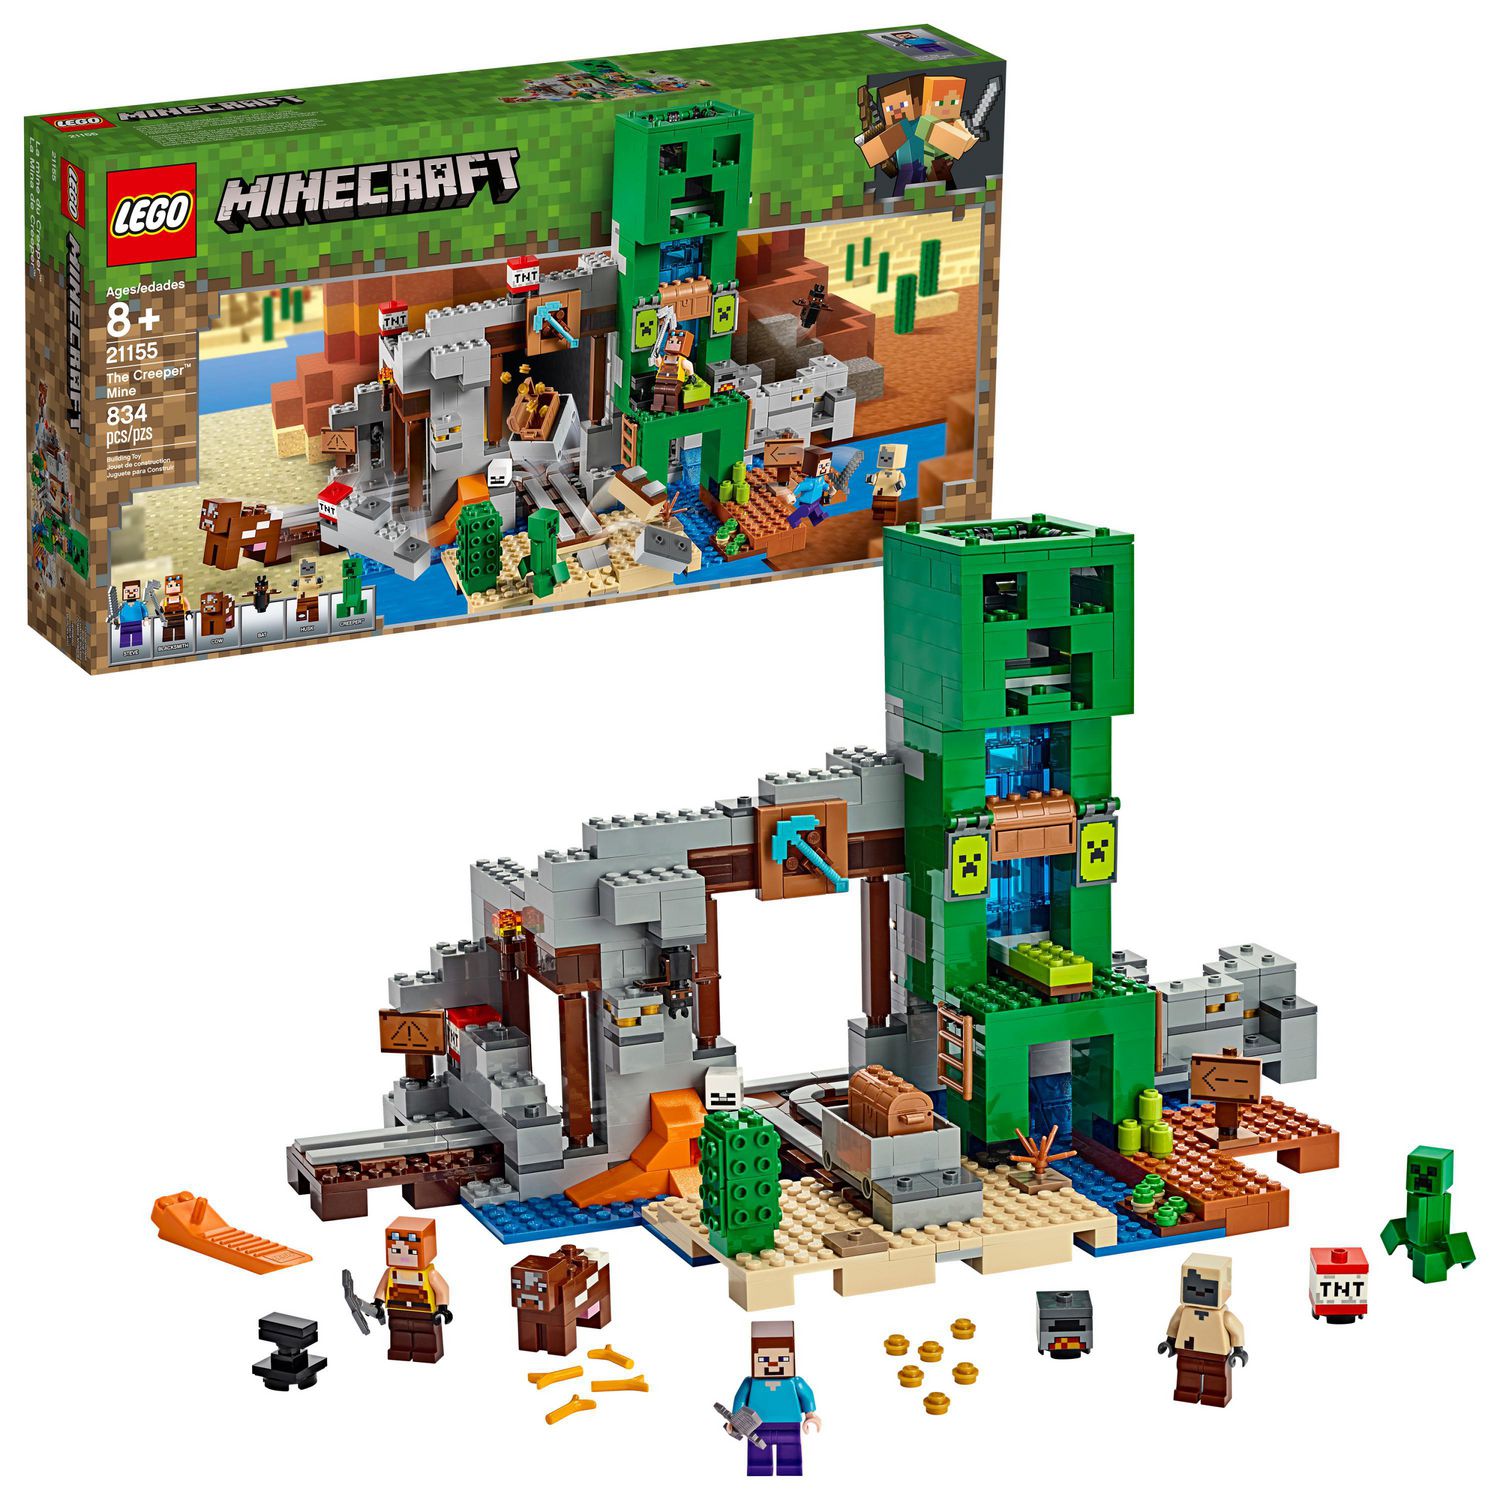 LEGO Minecraft The Creeper Mine 21155 Toy Building Kit (834 Piece